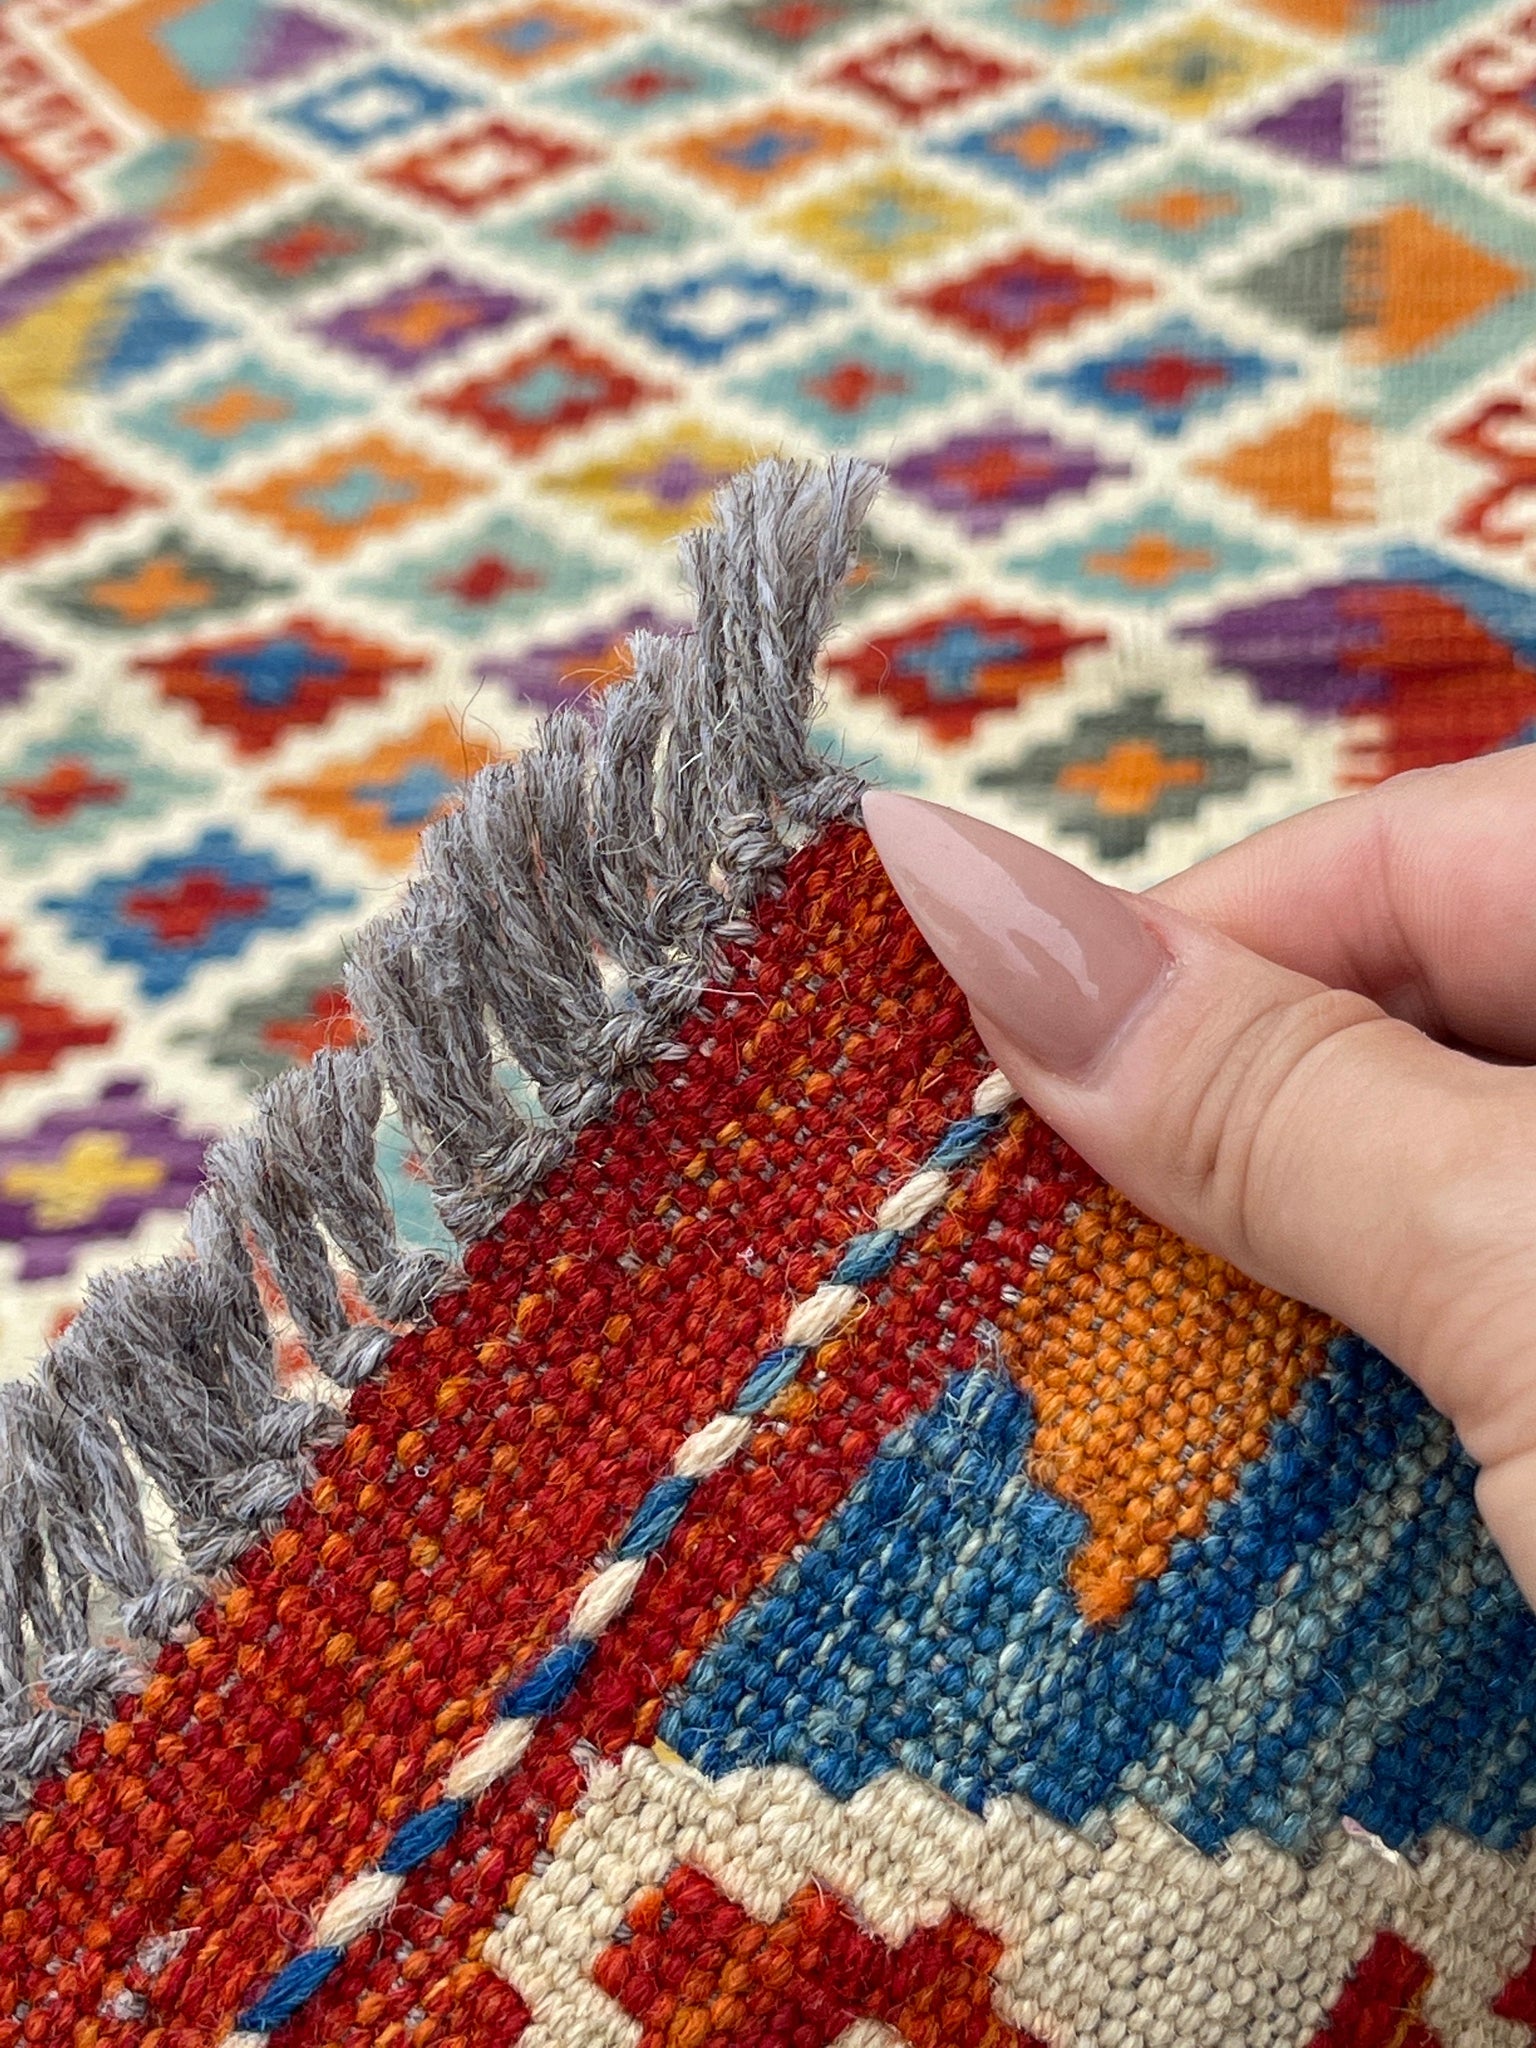 3x13 (90x395) Handmade Afghan Kilim Rug Runner | Ivory Cream Red Yellow Purple Orange Colorful | Flatweave Flat Weave Tribal Oriental Boho